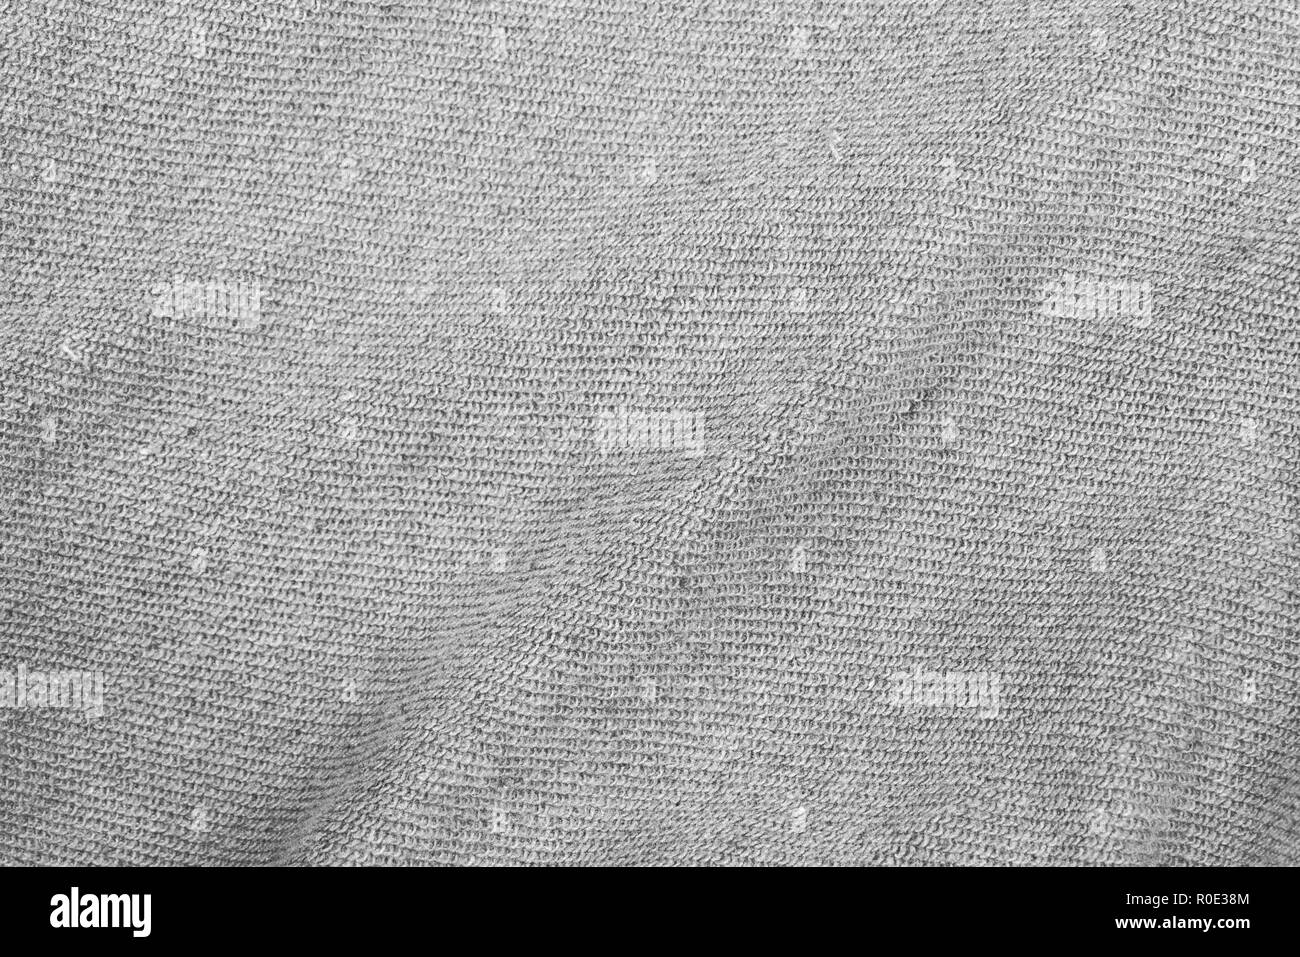 texture background light grey fabric cloth Stock Photo - Alamy